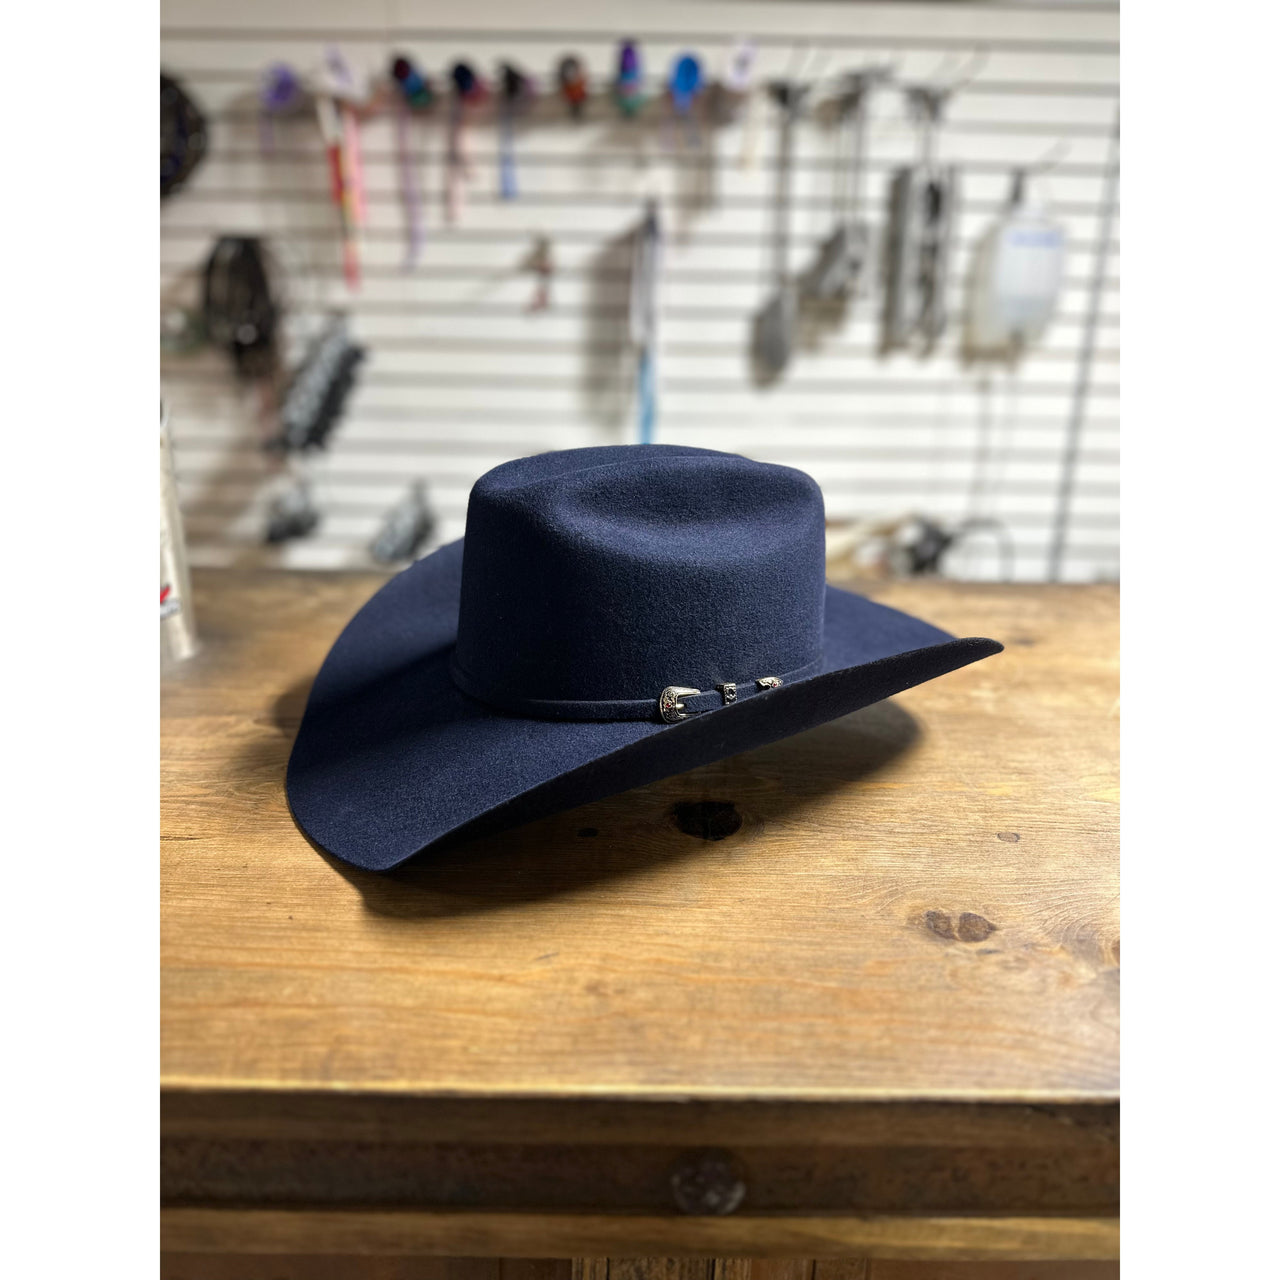 Prohat  Wool Felt Precreased Western Hat - Fort Worth Blue